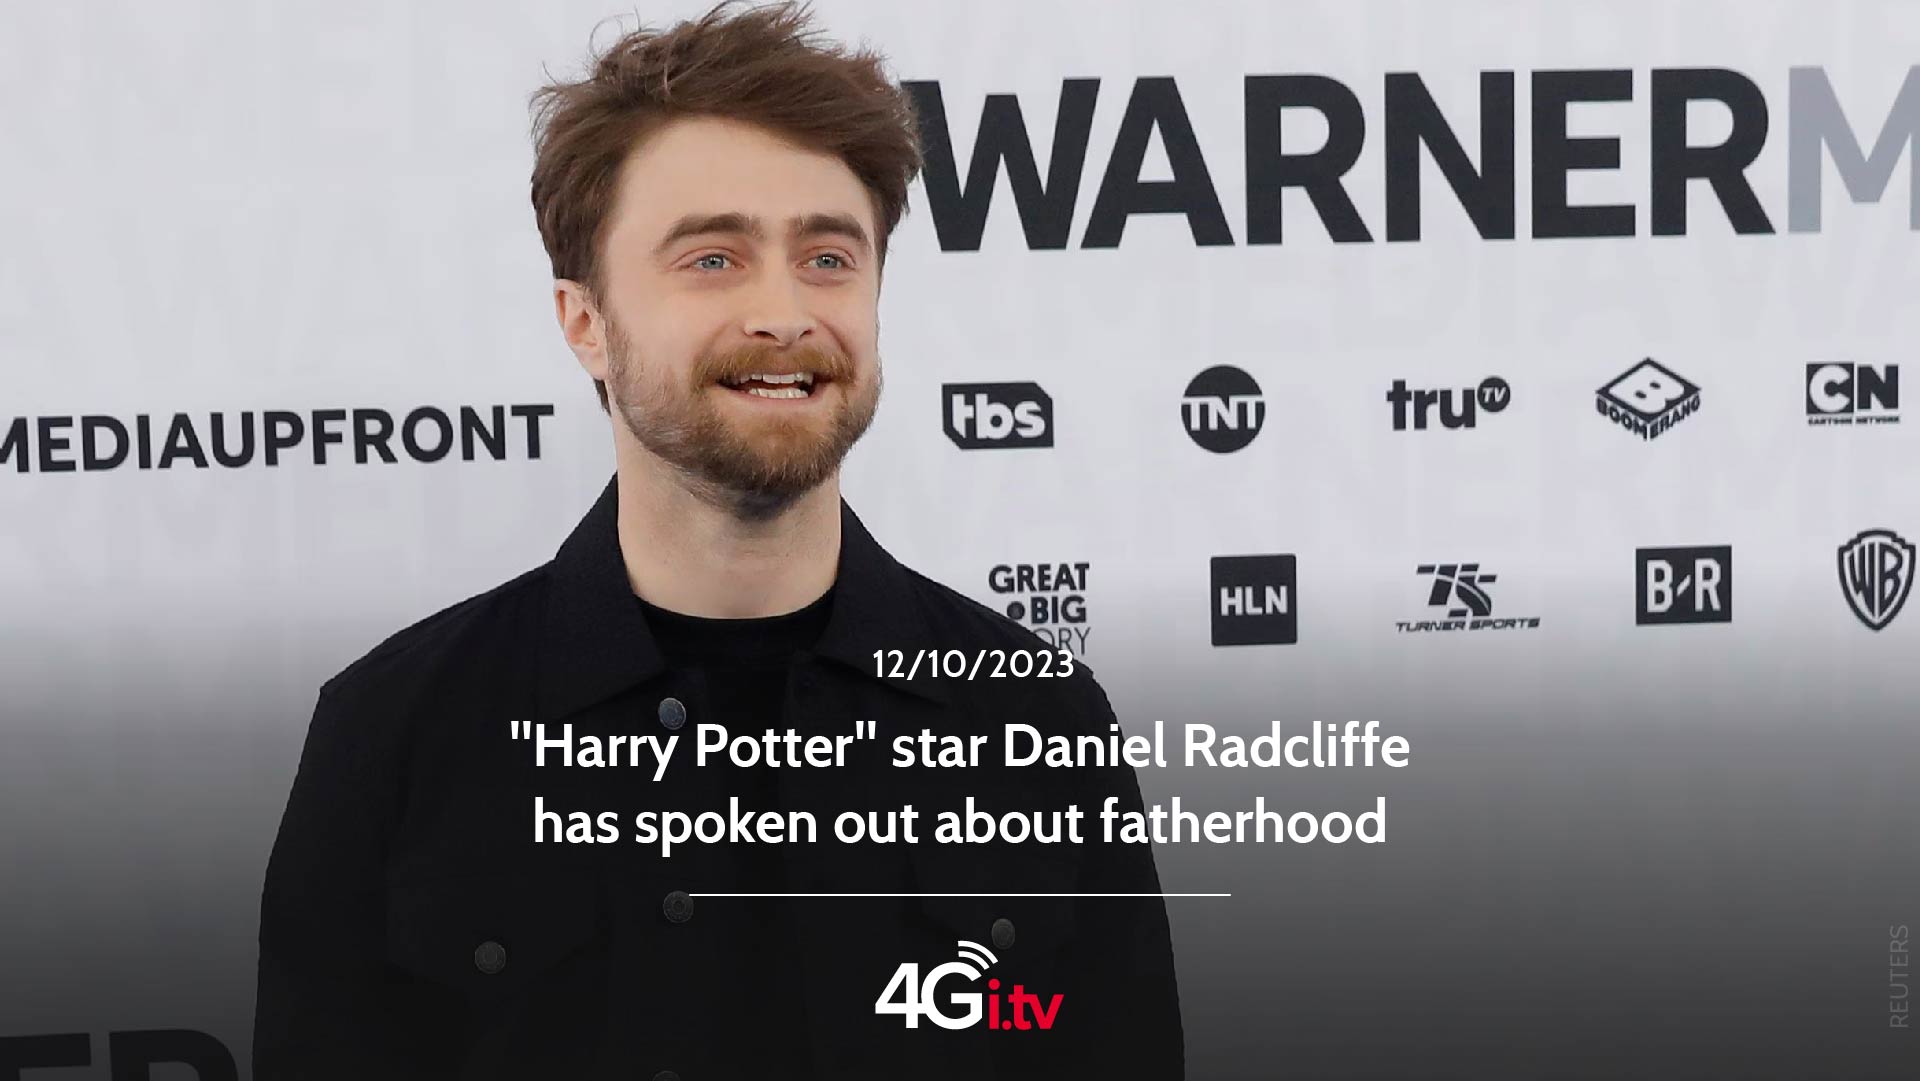 Подробнее о статье “Harry Potter” star Daniel Radcliffe has spoken out about fatherhood